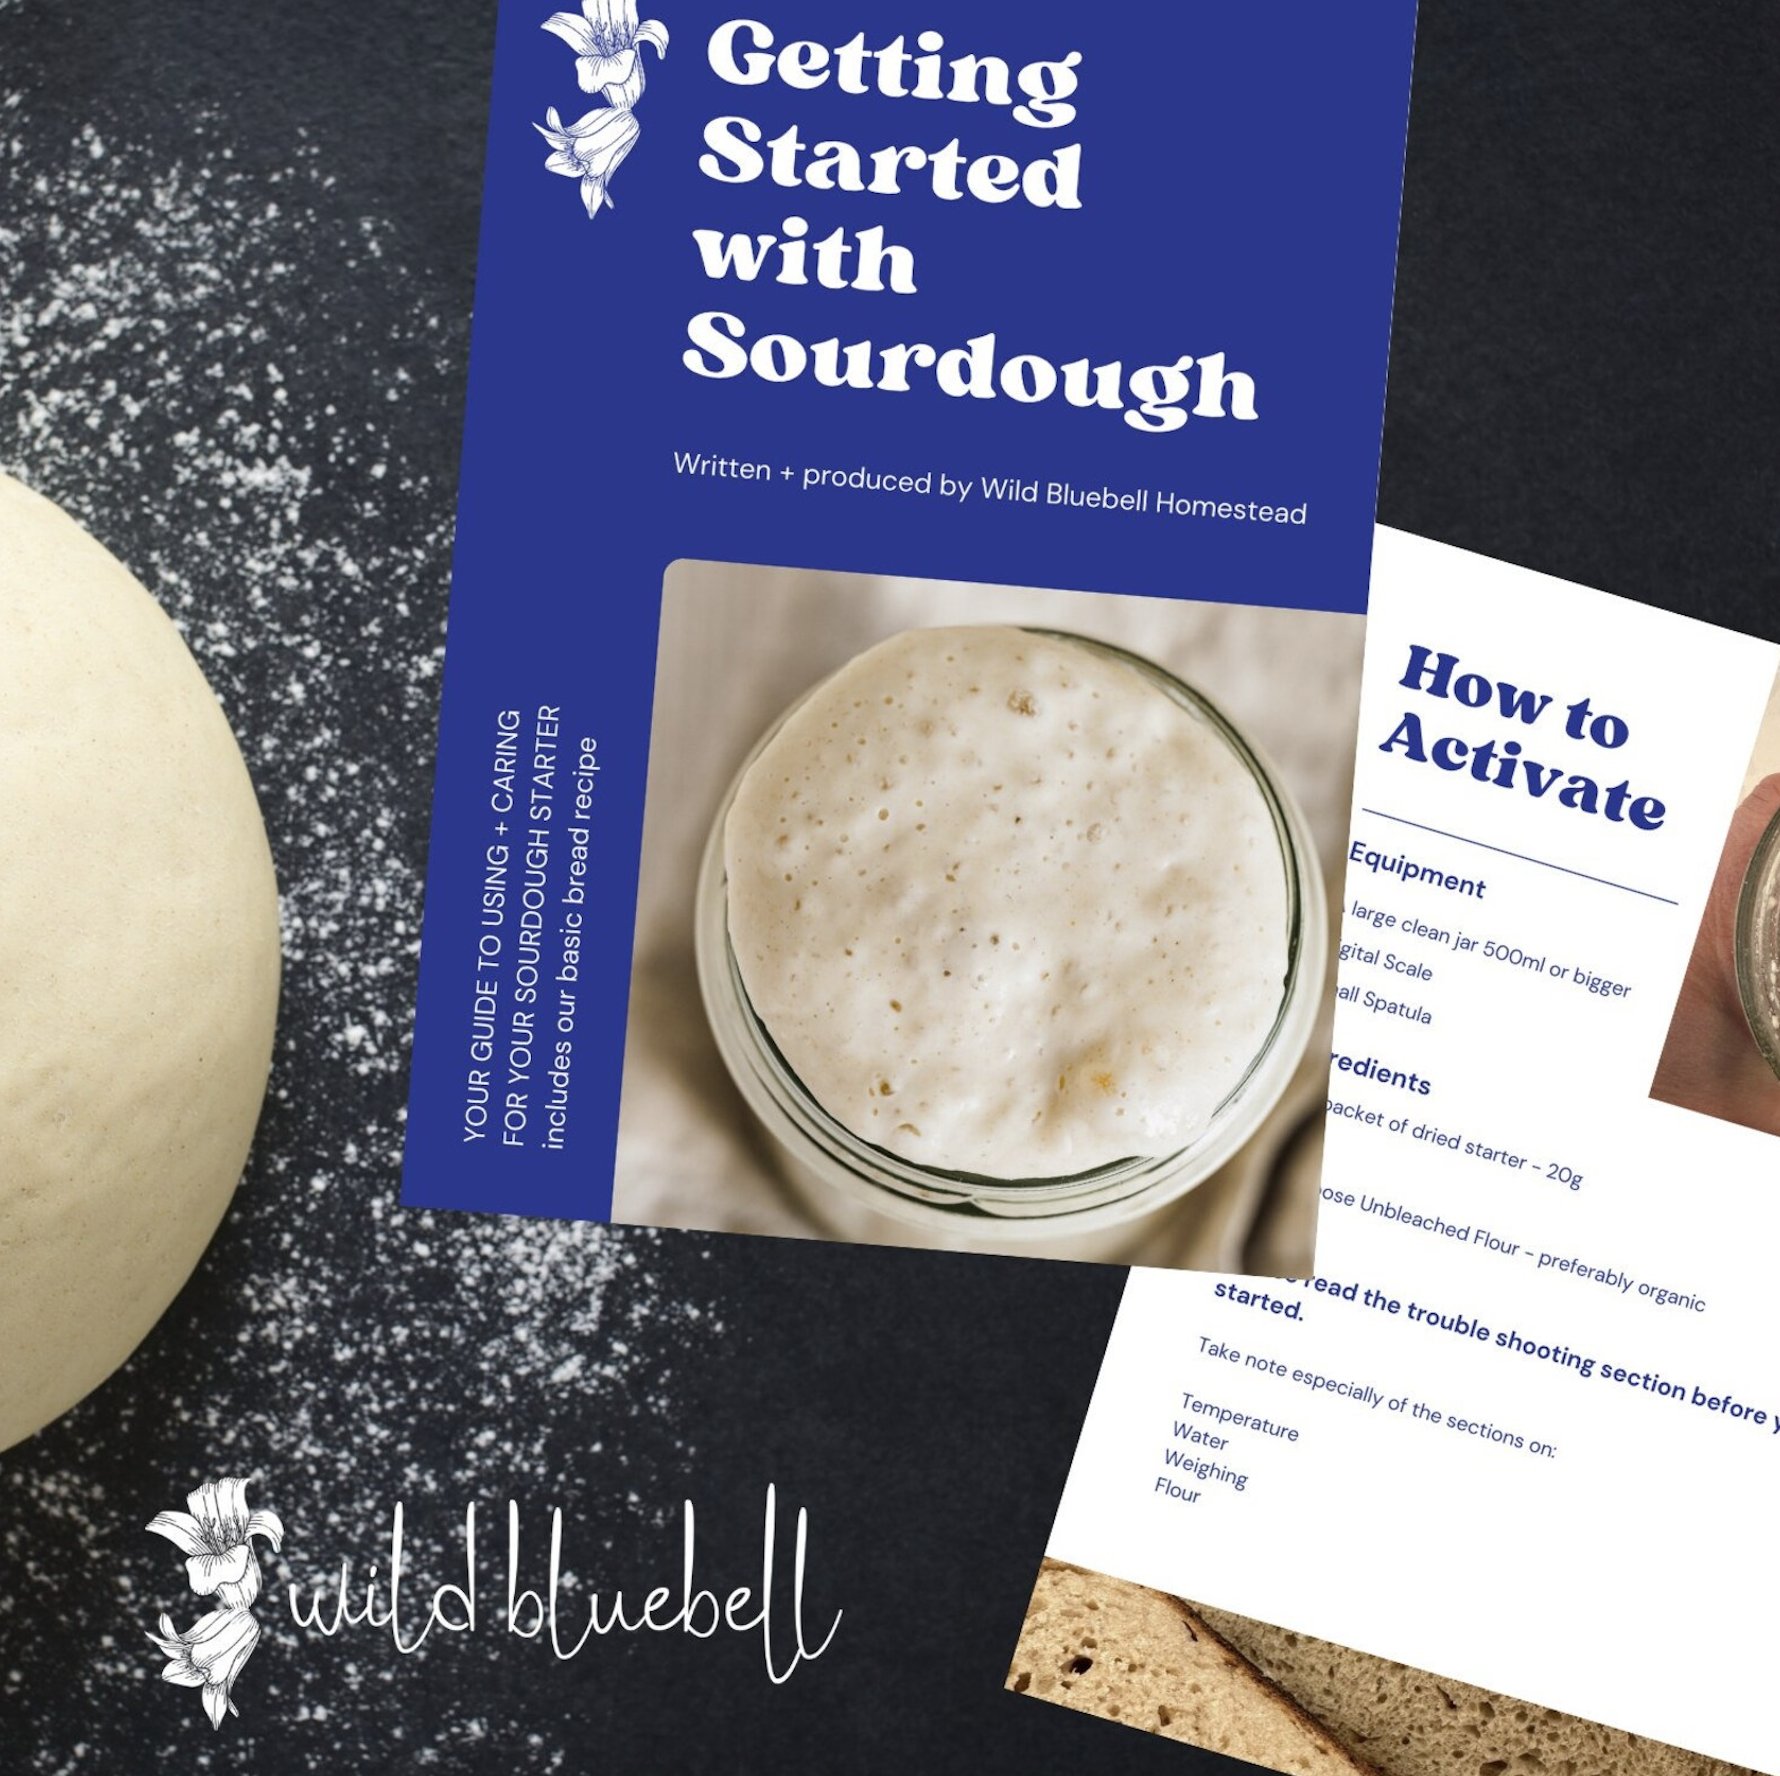 buy sourdough starter guide ebook pdf digital download from wild bluebell homestead etsy shop online